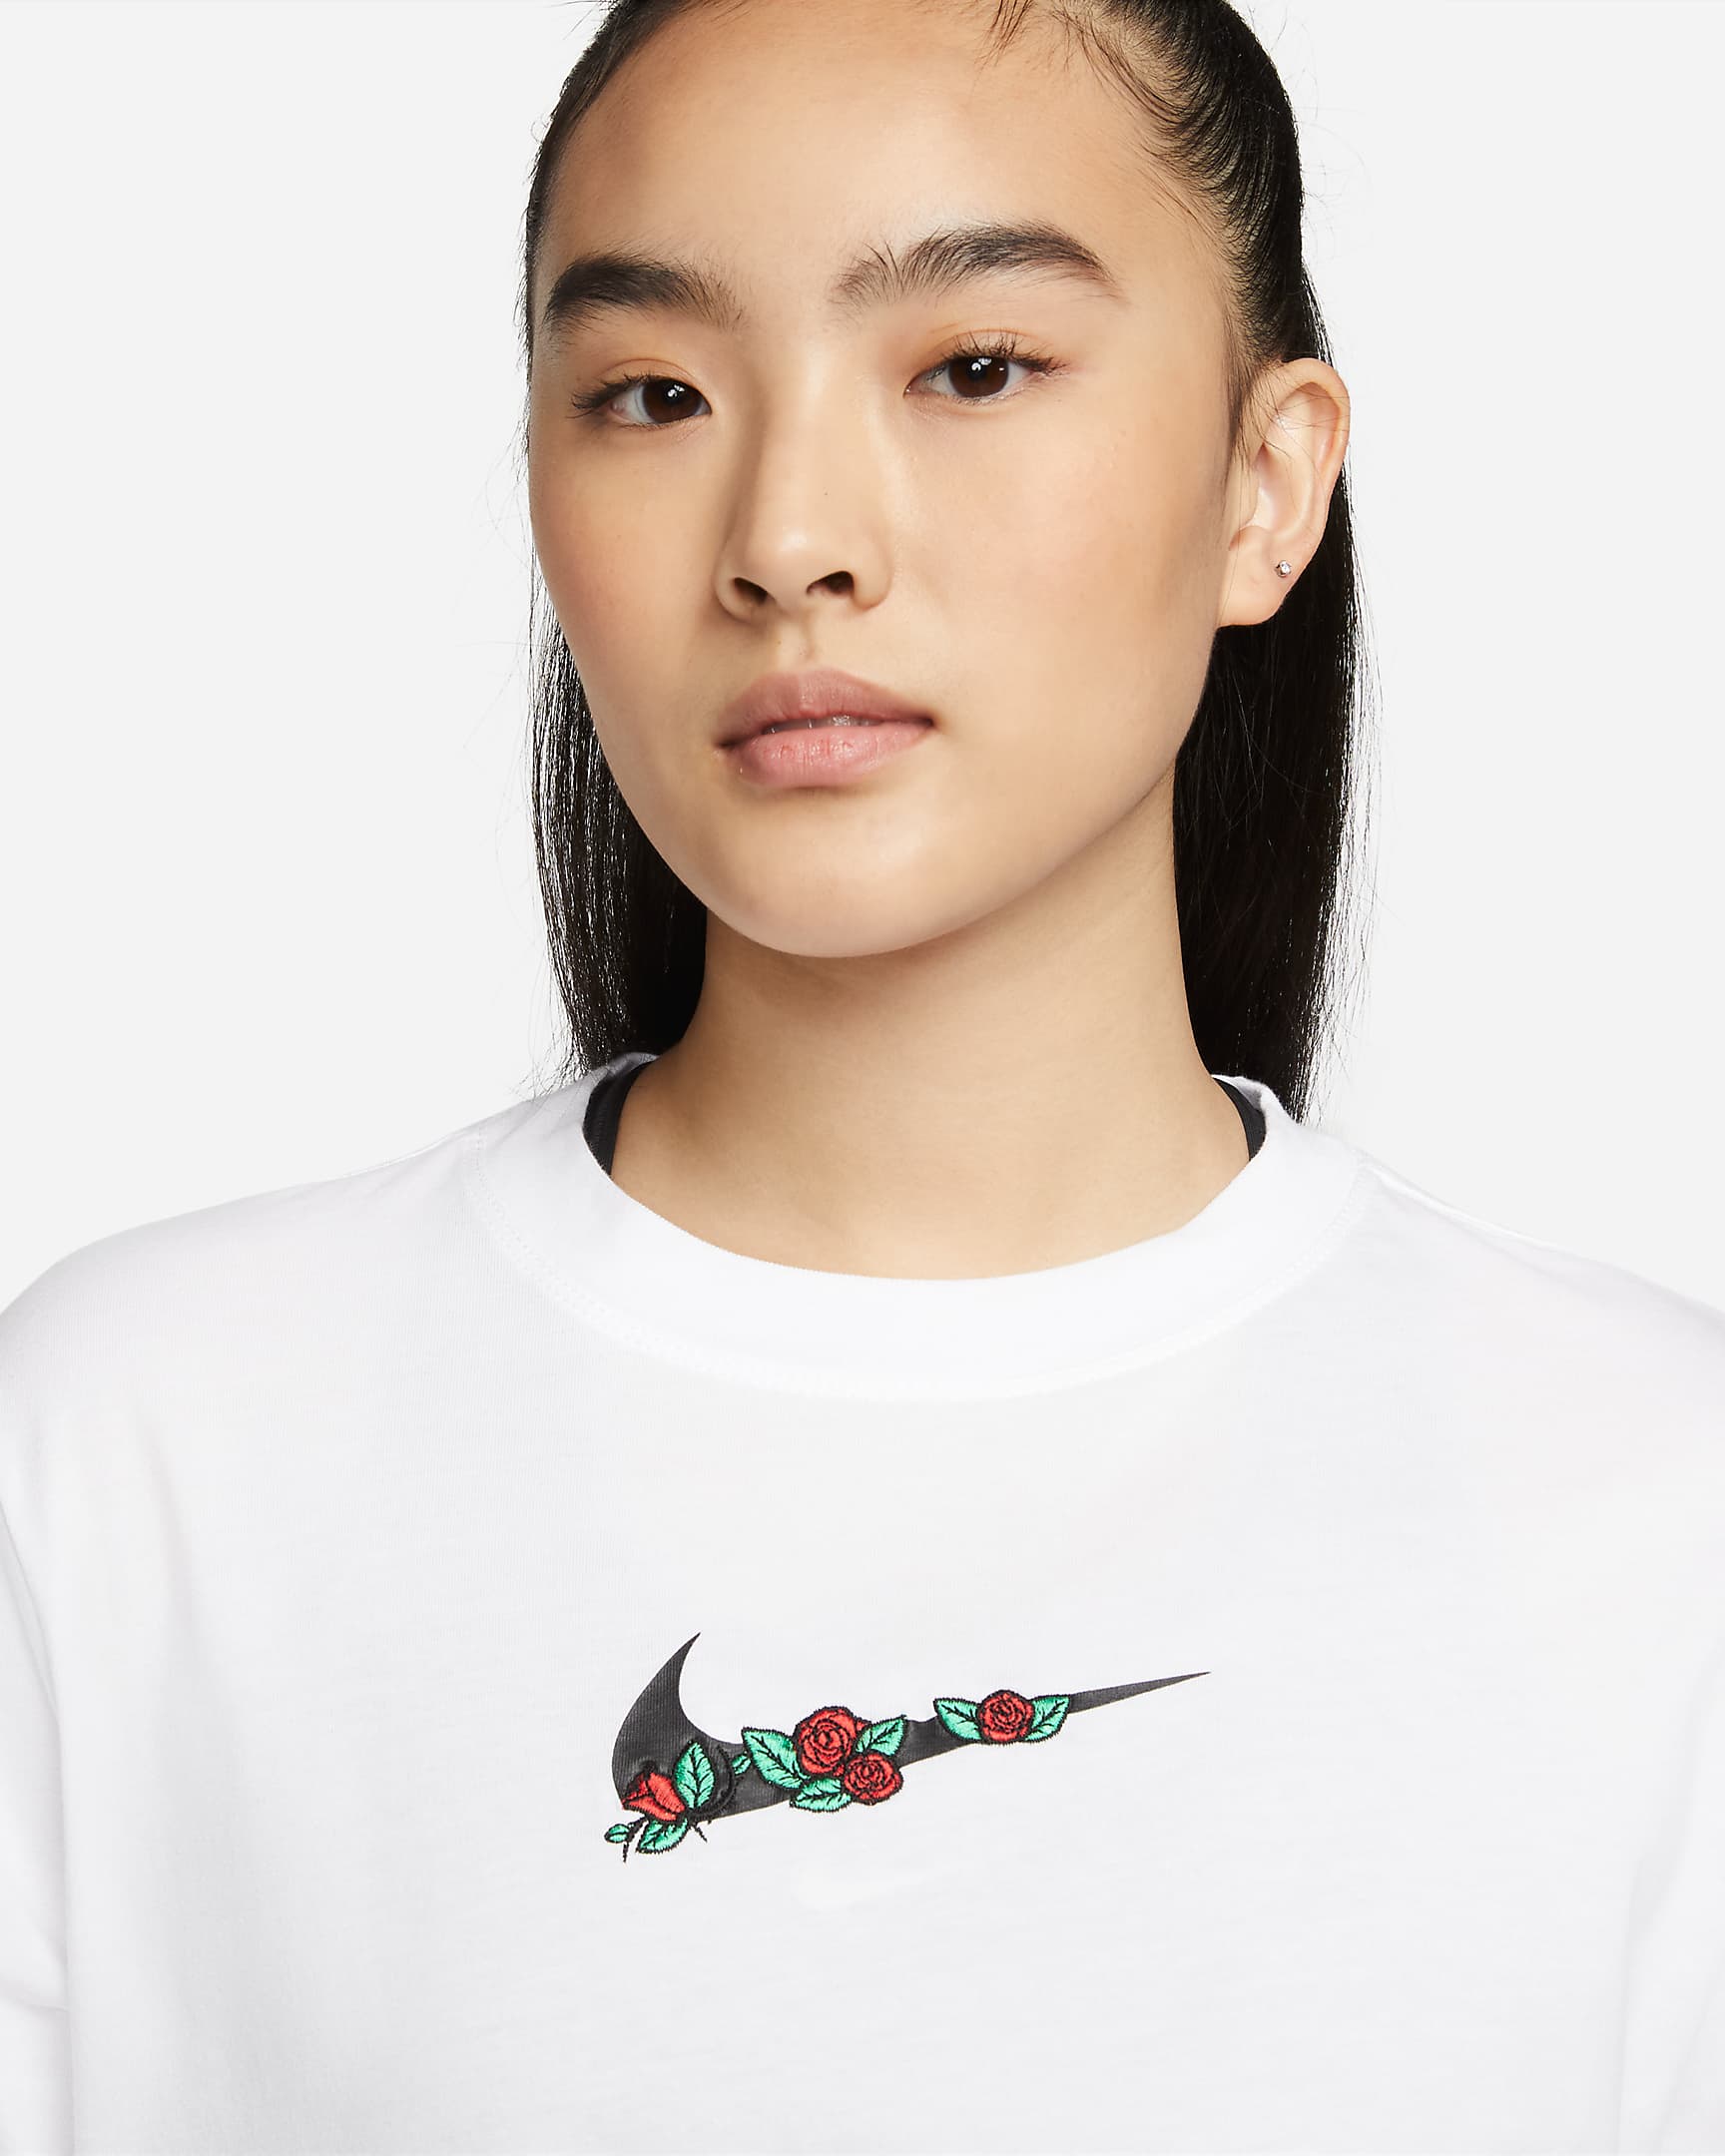 Nike Sportswear Women's T-Shirt. Nike JP